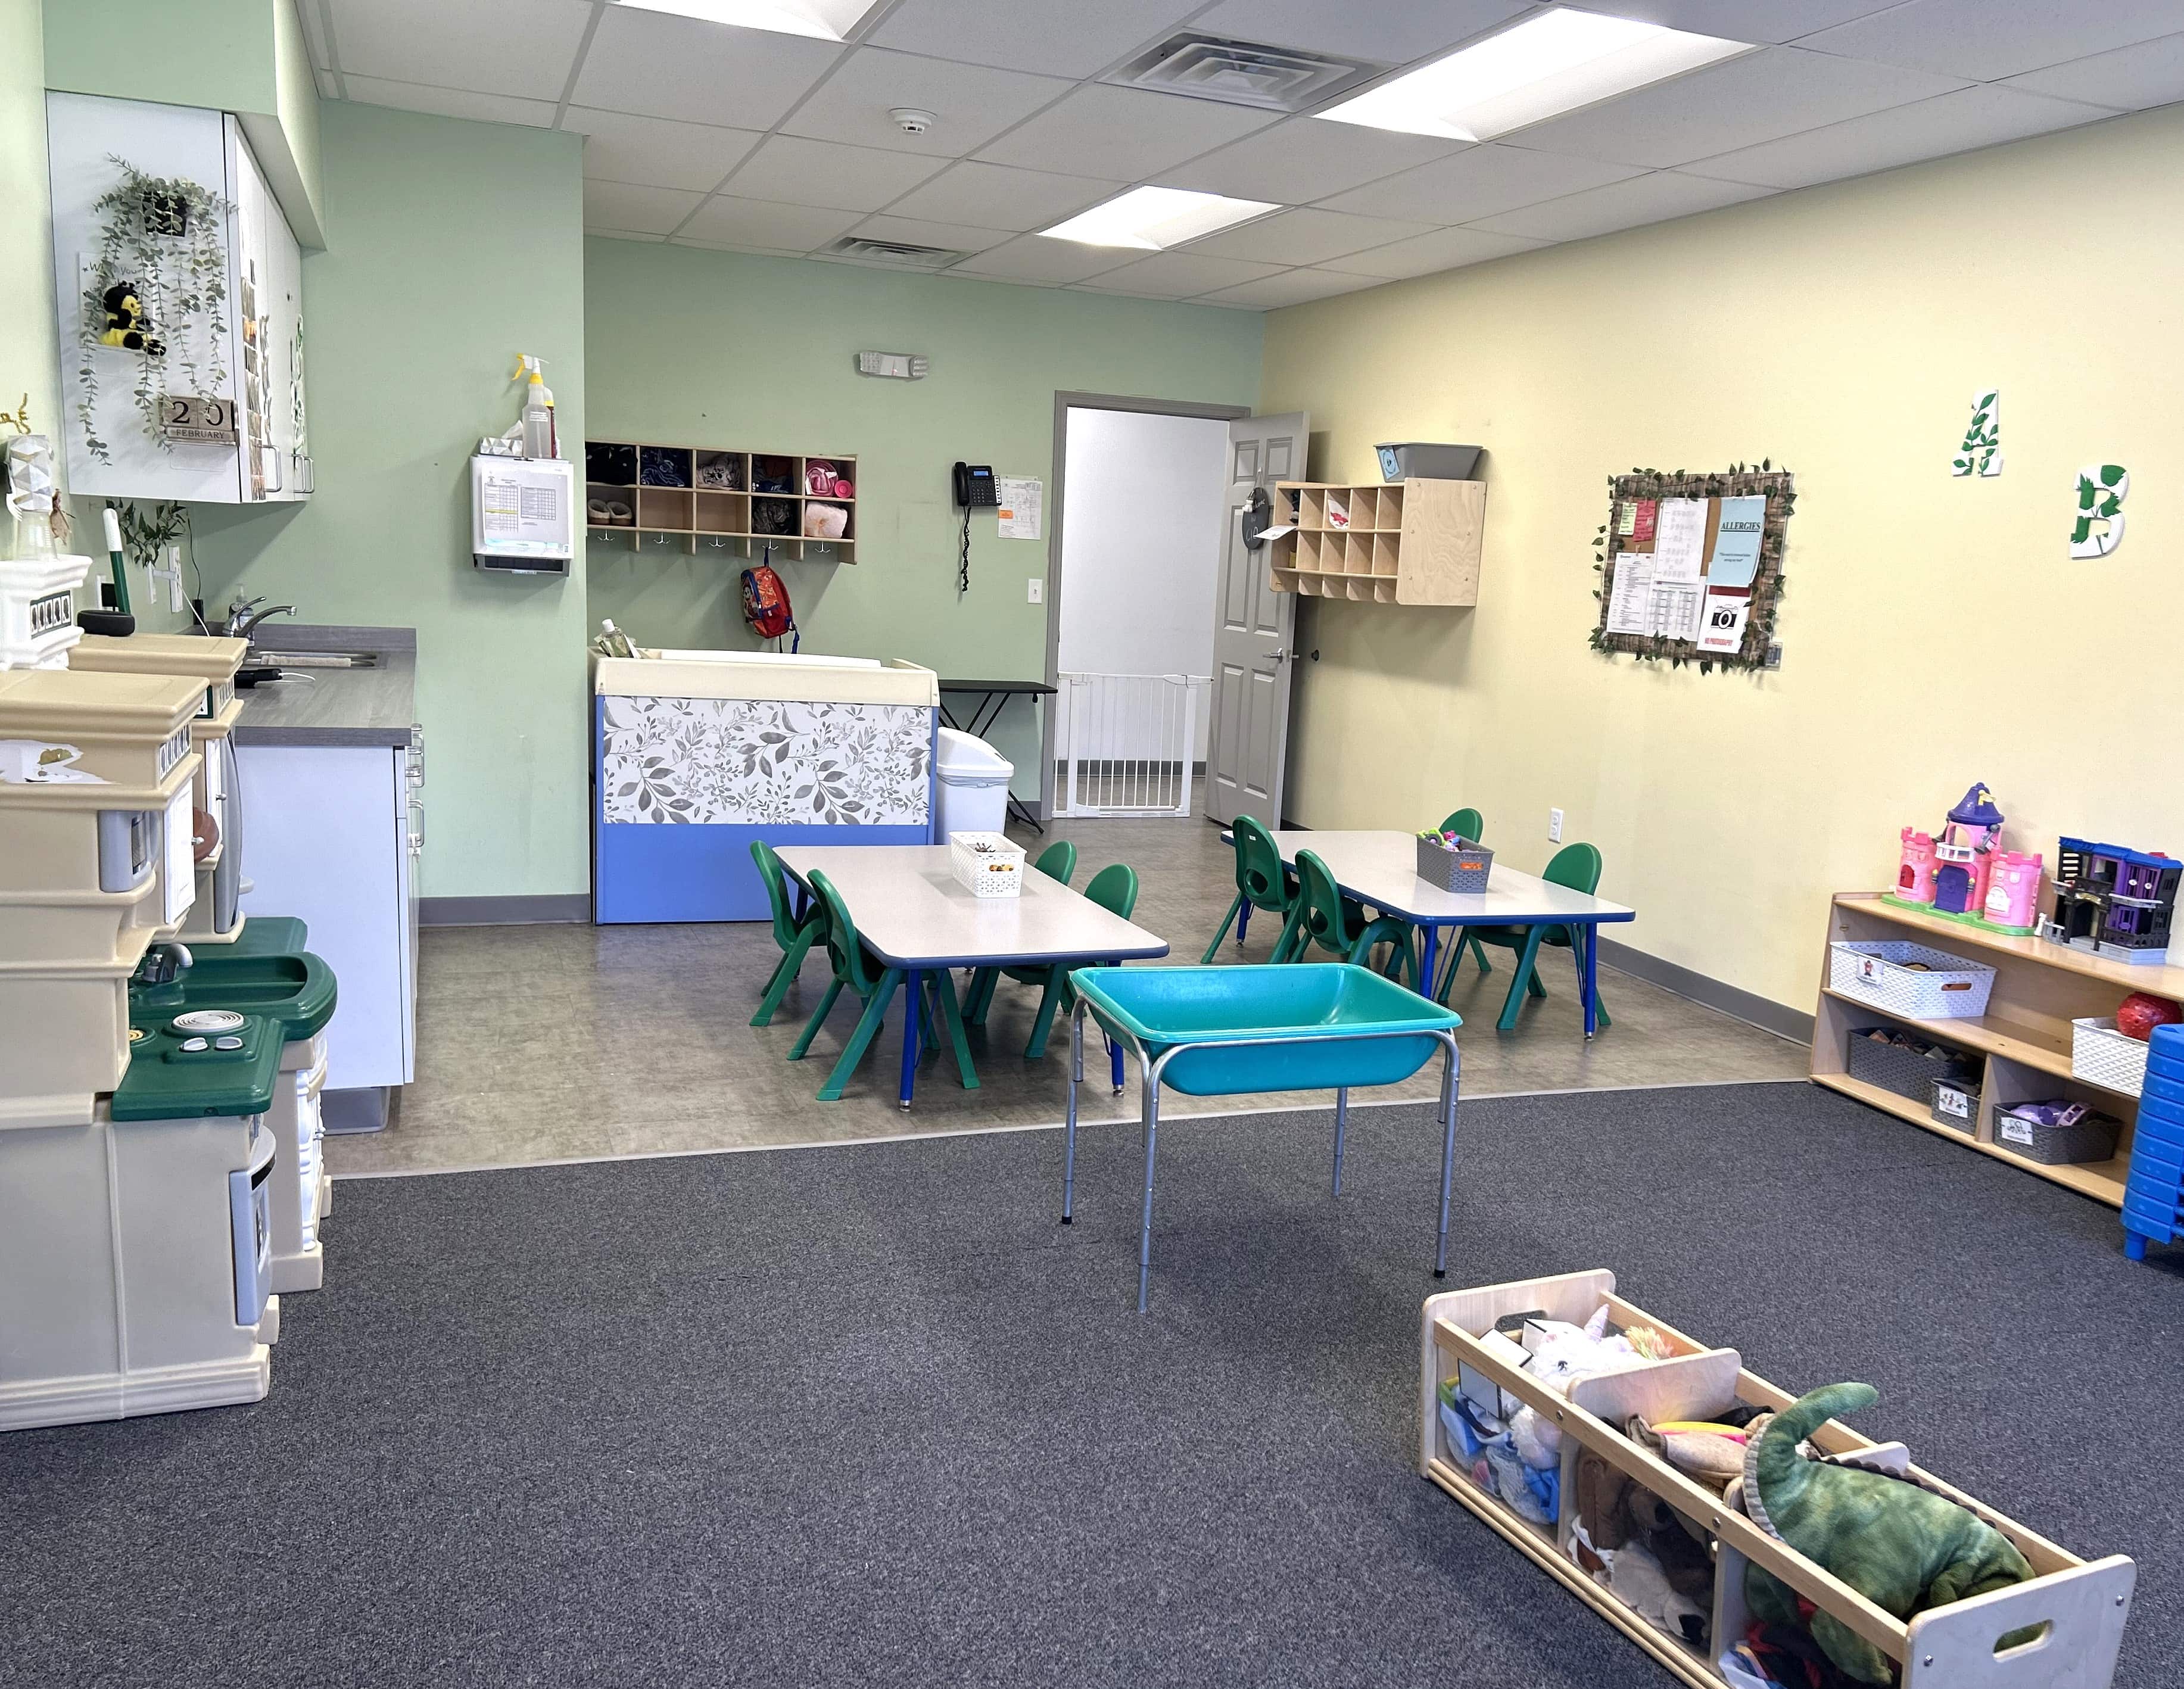 Imagination Station Batavia: Premier daycare, preschool, and pre-k in Genesee County